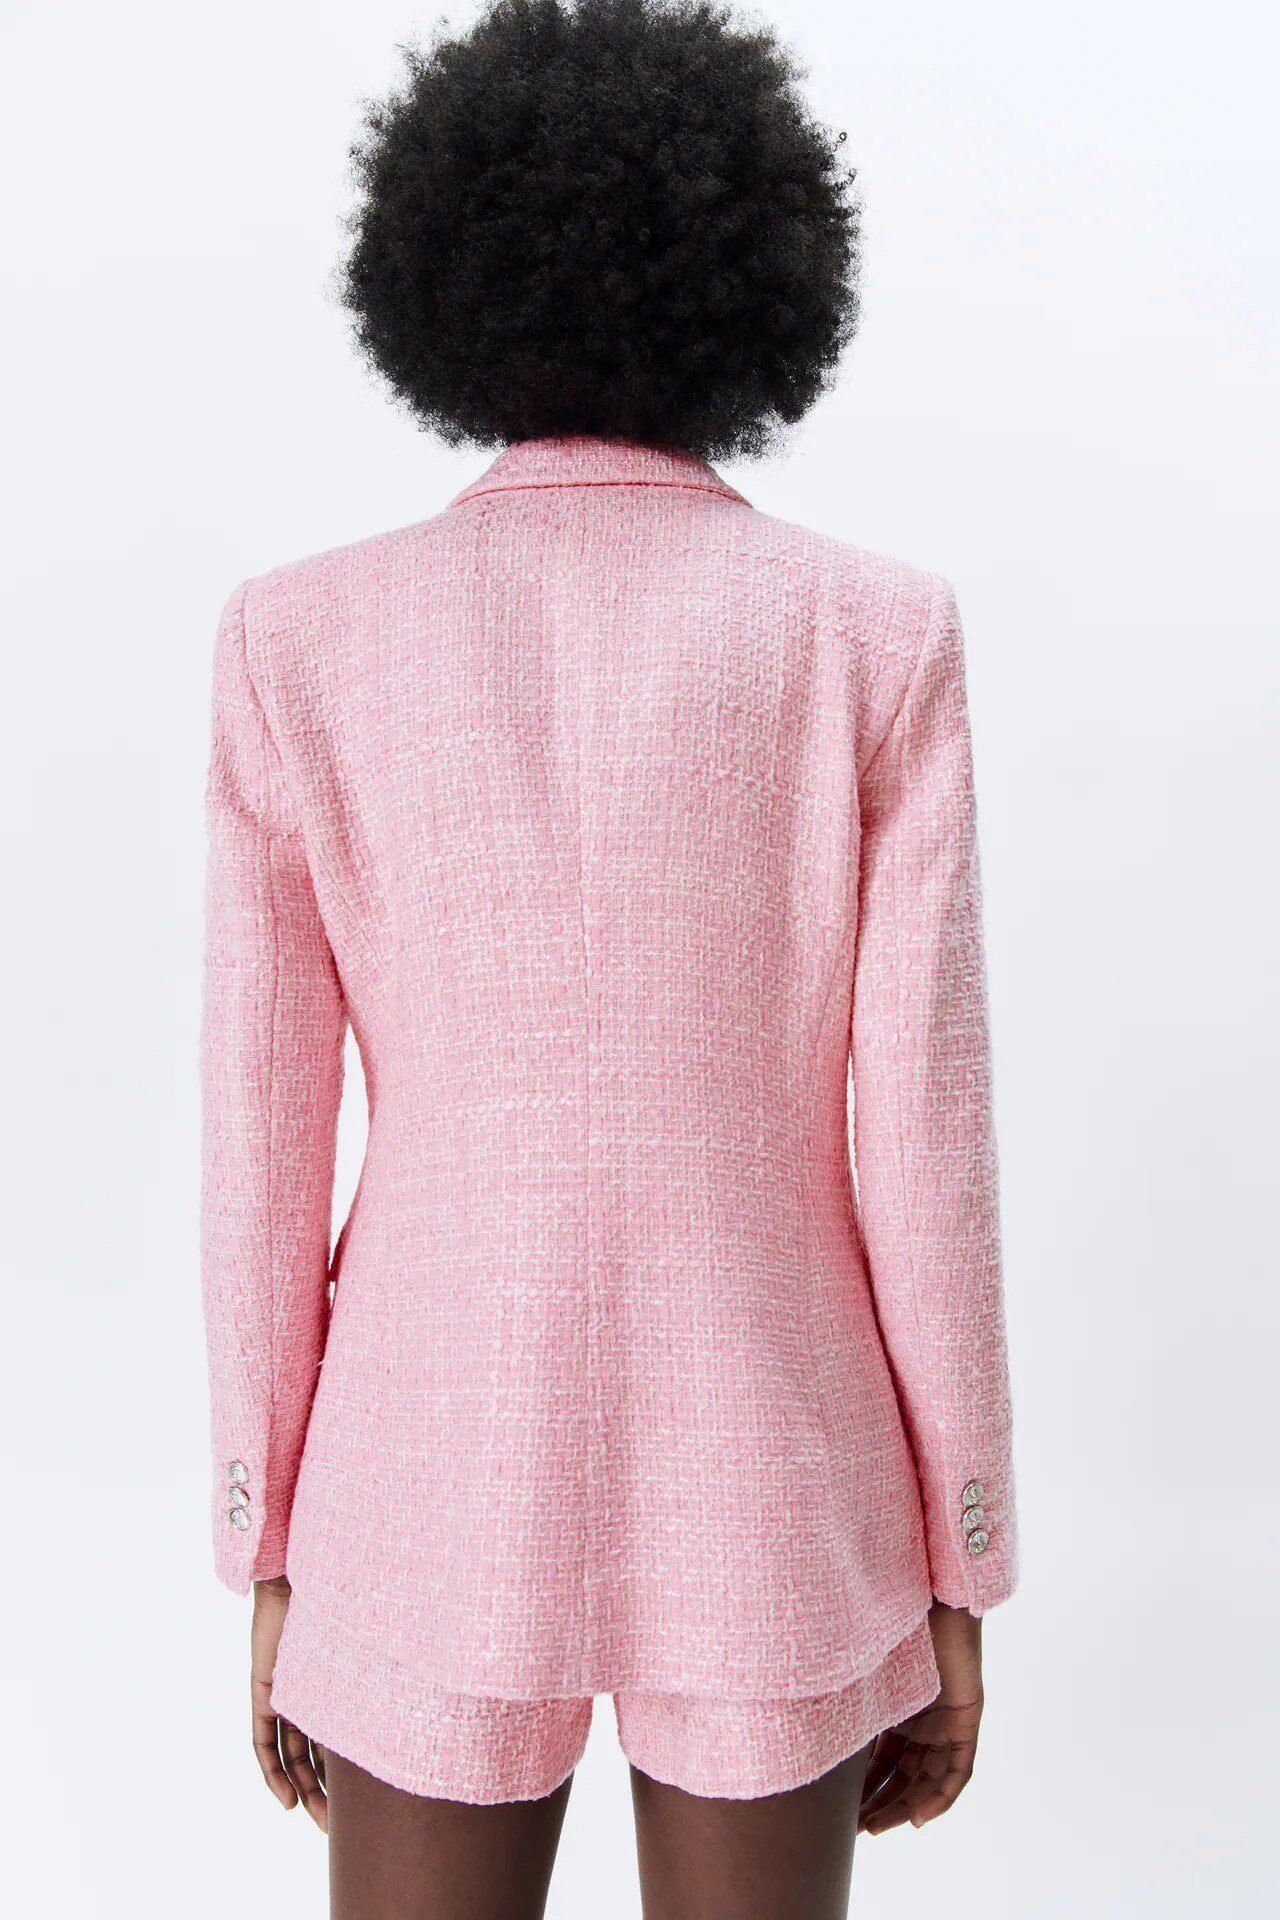 Buy Stylish Pink Women's Suit at LeStyleParfait Kenya